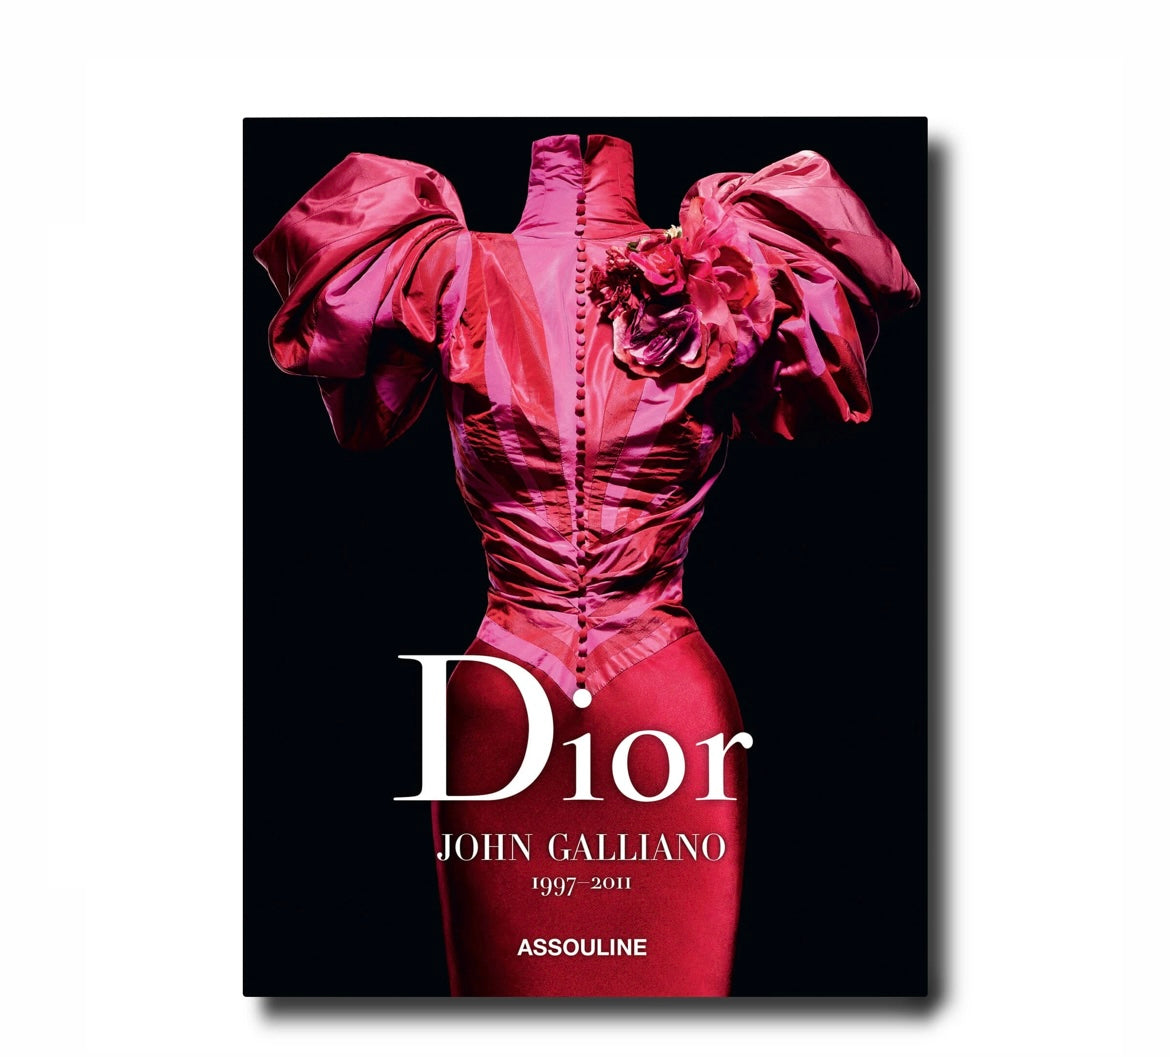 Assouline  "Dior John Galliano"